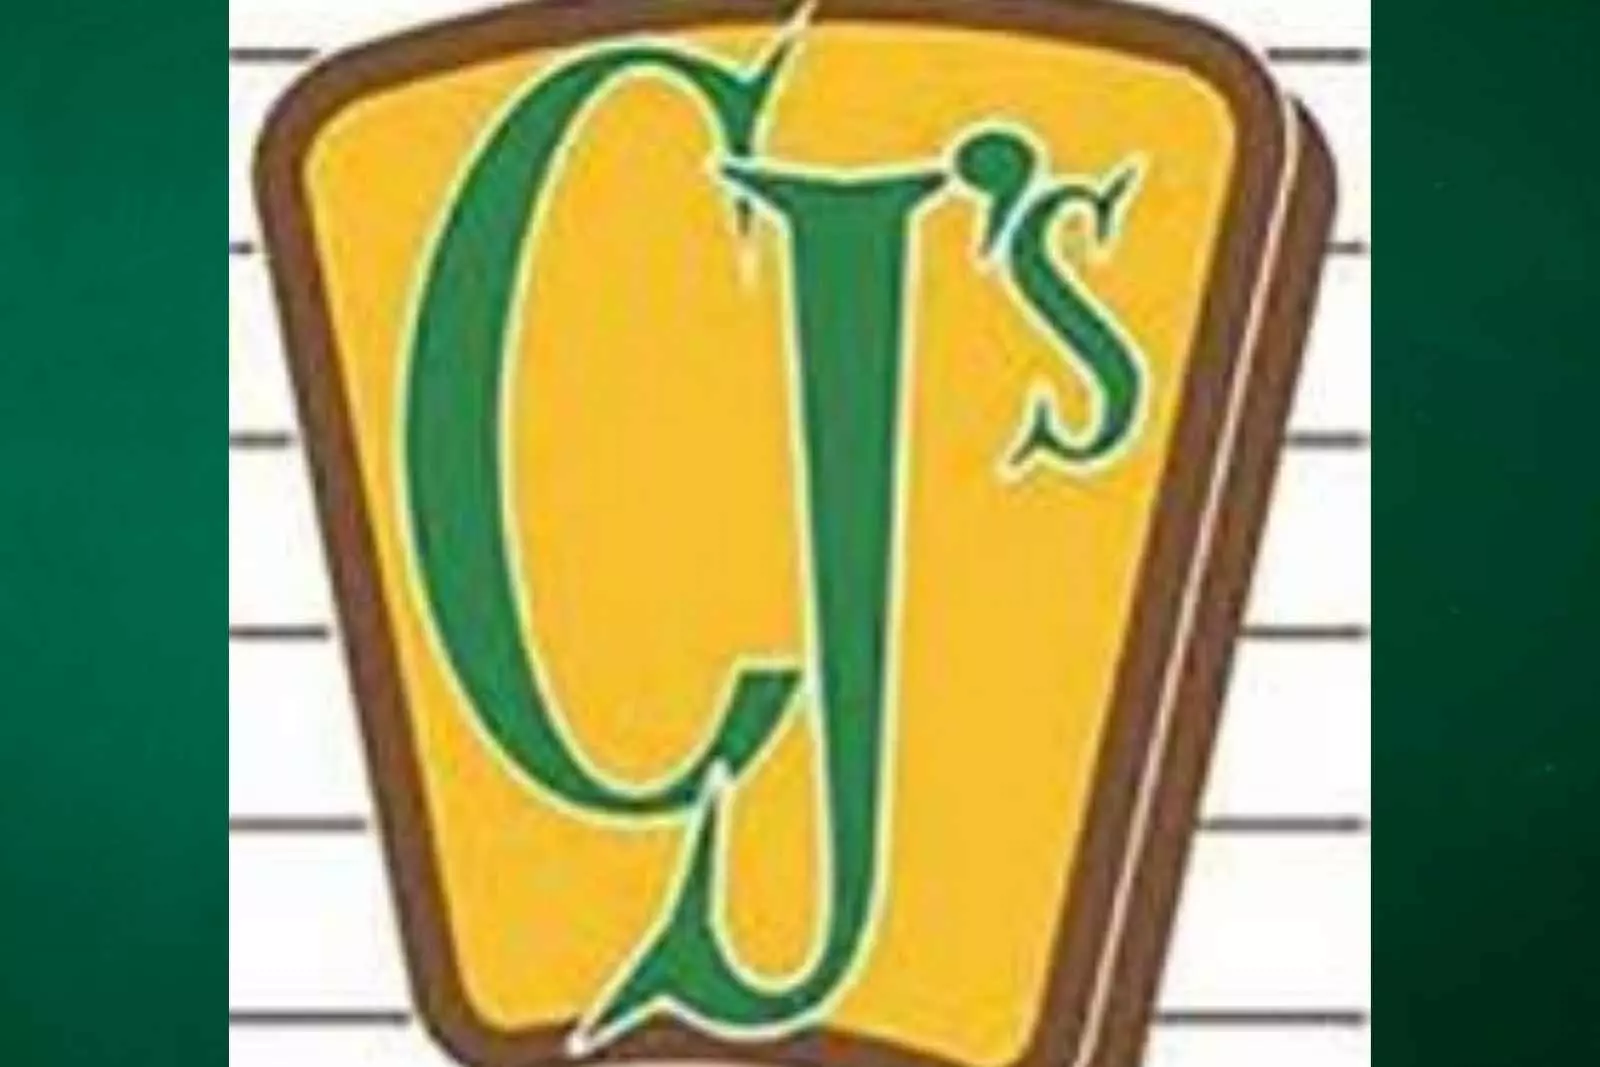 Authentic Lettered Green Jersey Register #25 - Iowa Wild Hockey Club